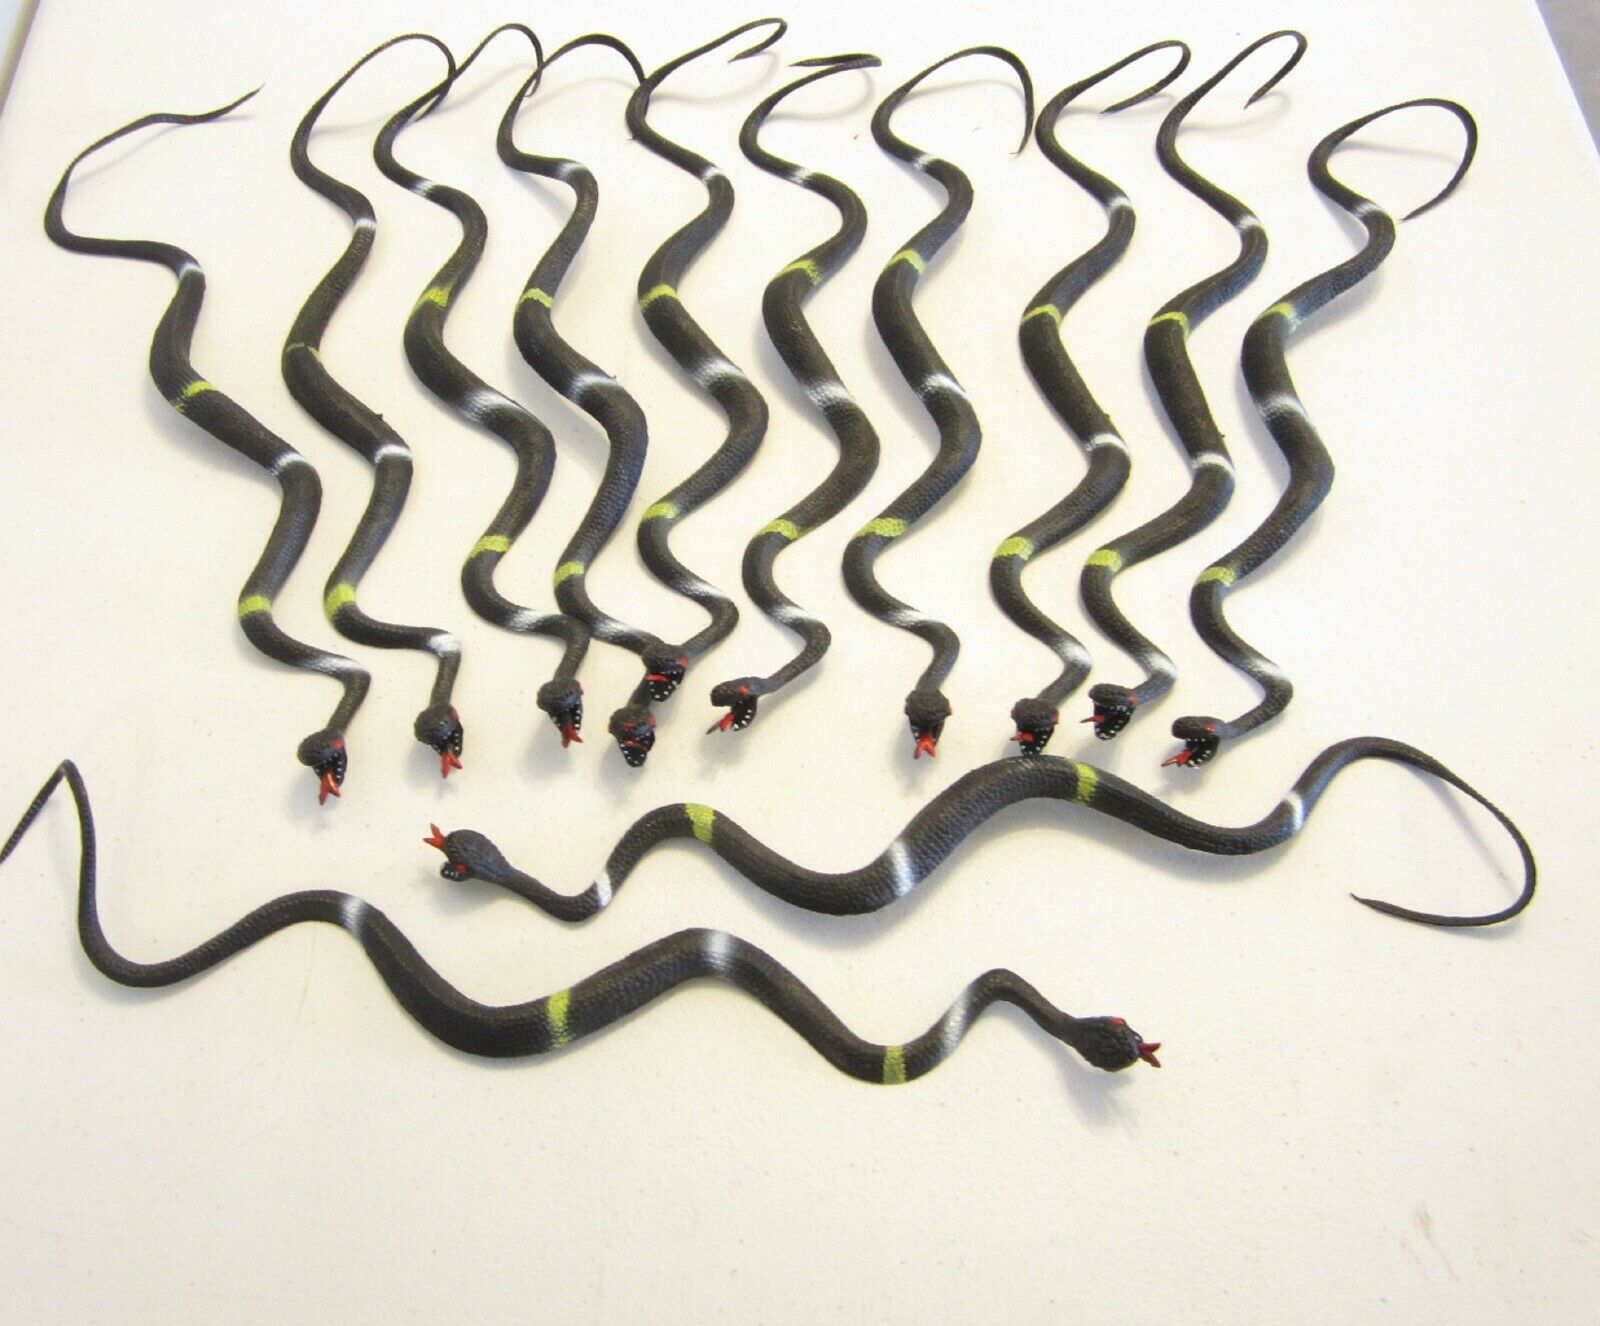 12 New Black Rubber Snakes 24" Toy Reptile Fake Pretend Snake Gag Gift